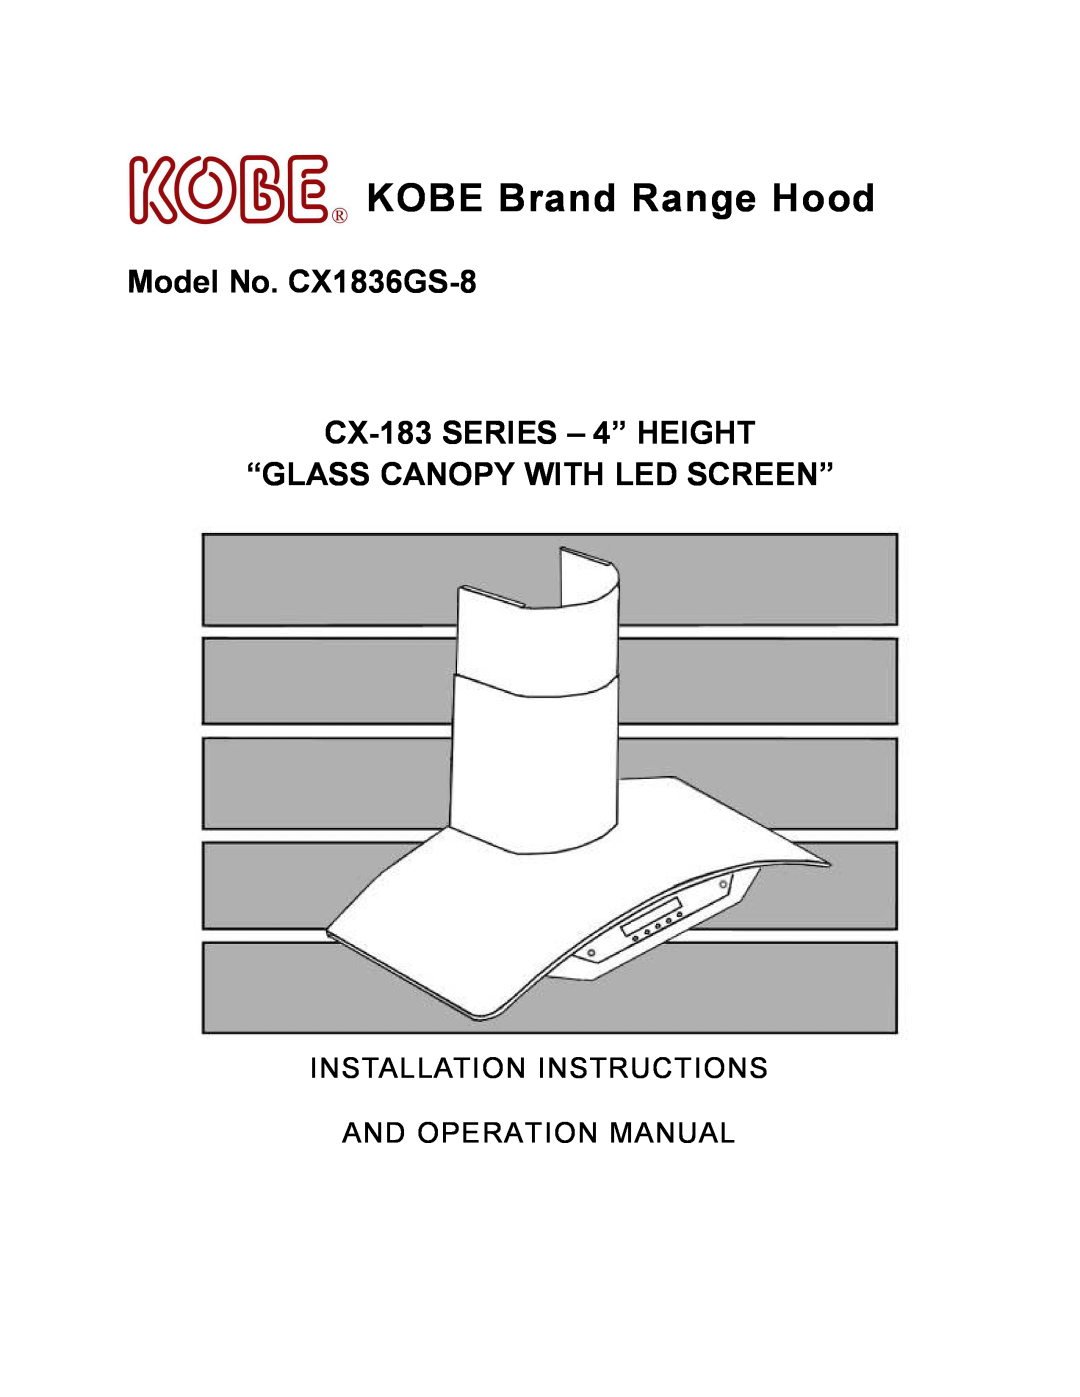 Kobe Range Hoods CX-183 installation instructions KOBE Brand Range Hood, Model No. CX1836GS-8 